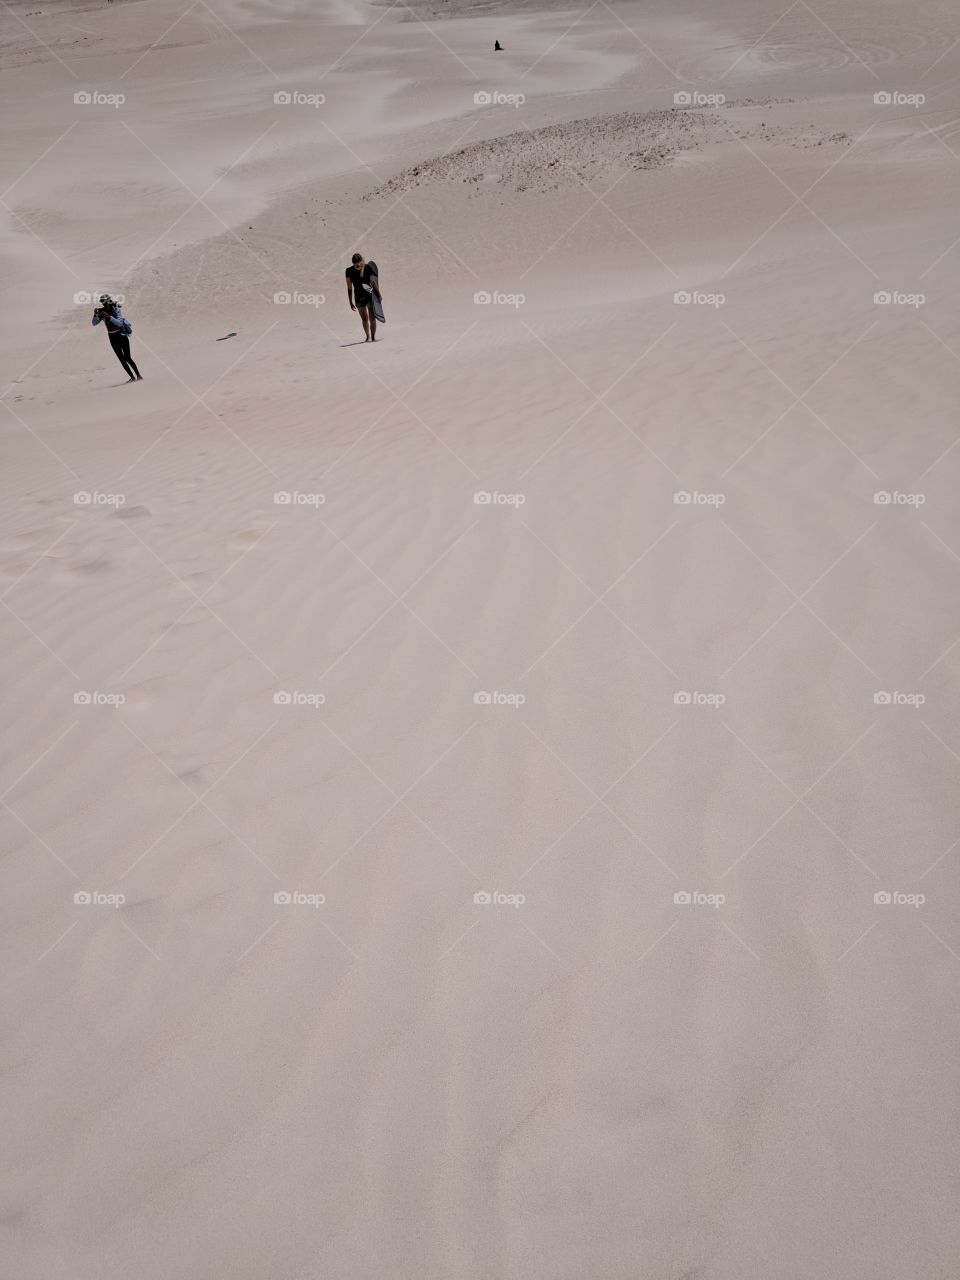 Sand dunes in Lancelin, Western Australia